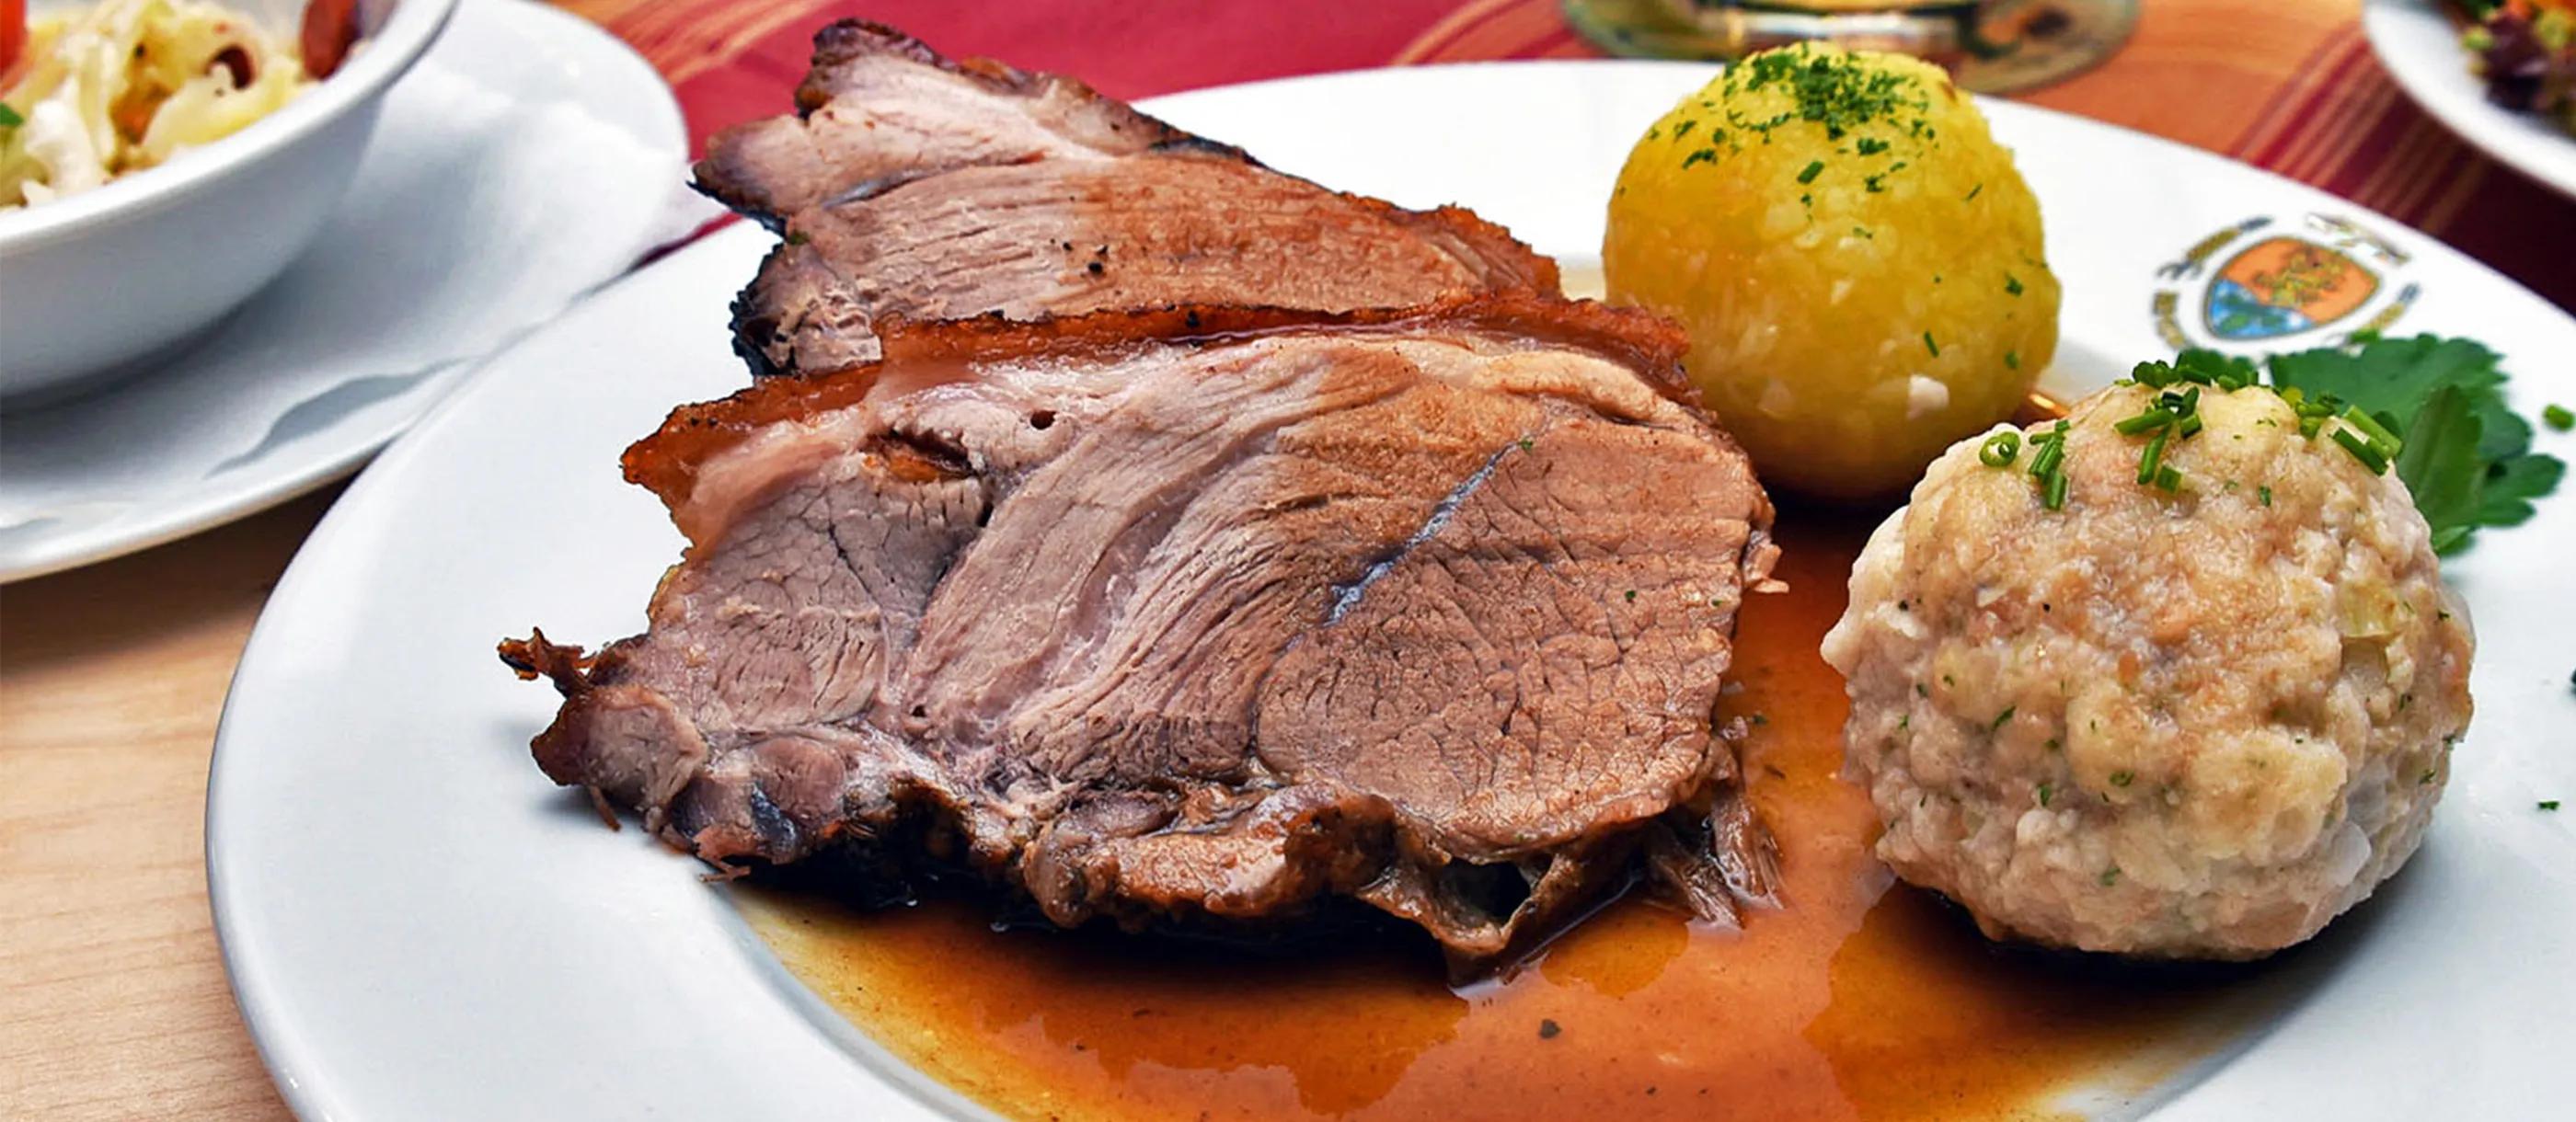 Schweinebraten | Traditional Pork Dish From Bavaria, Germany